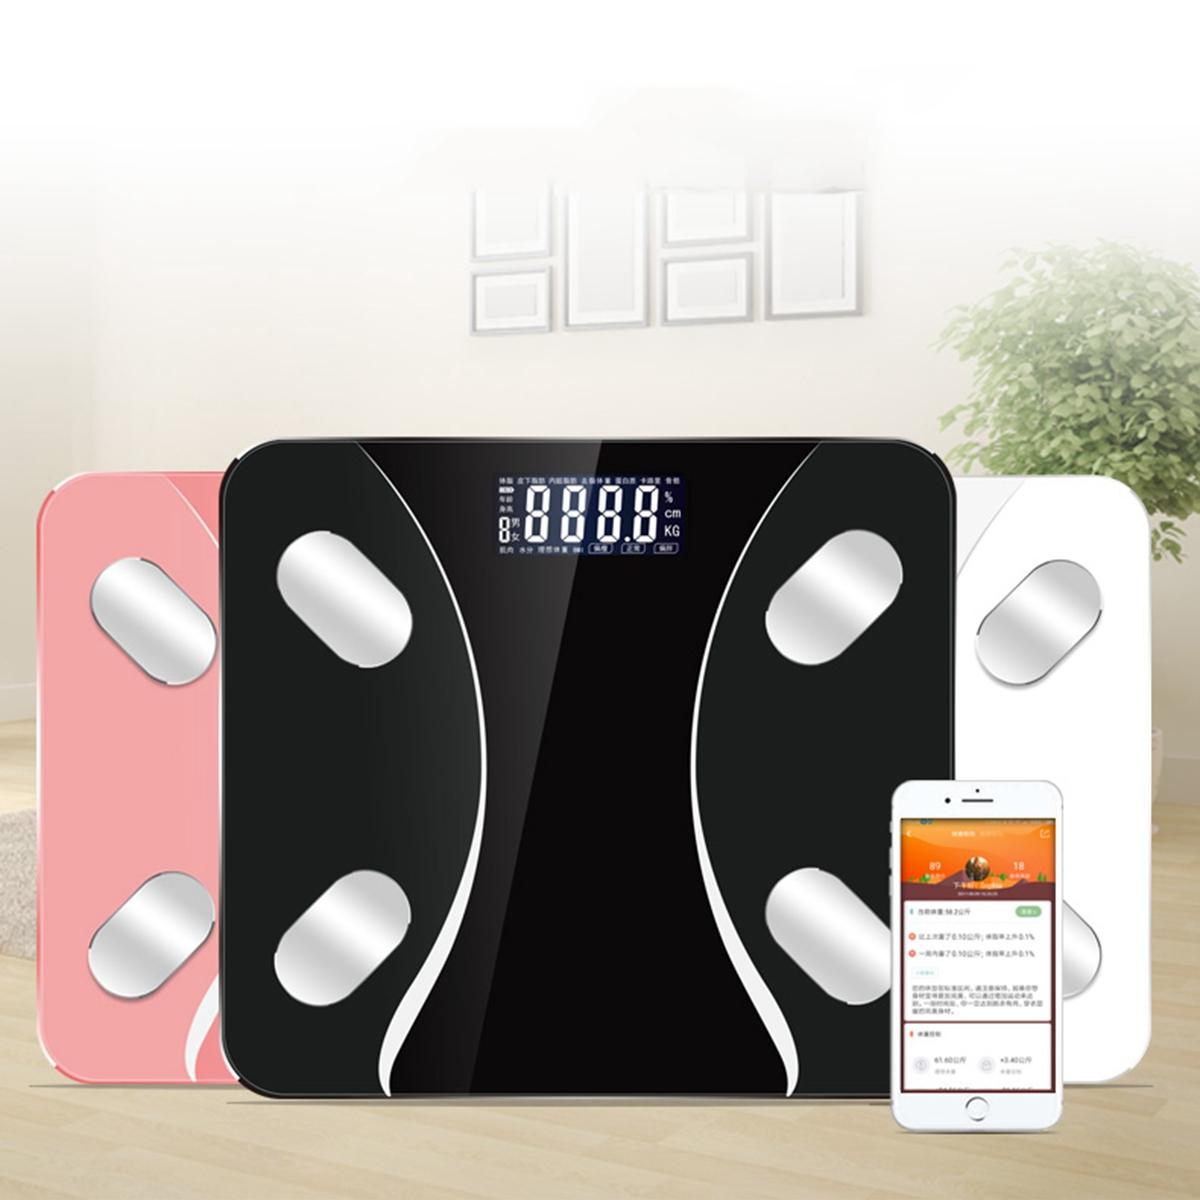 

Intelligent Digital Body Fat Scale Measure Human Body Composition Smart Bathroom Scale